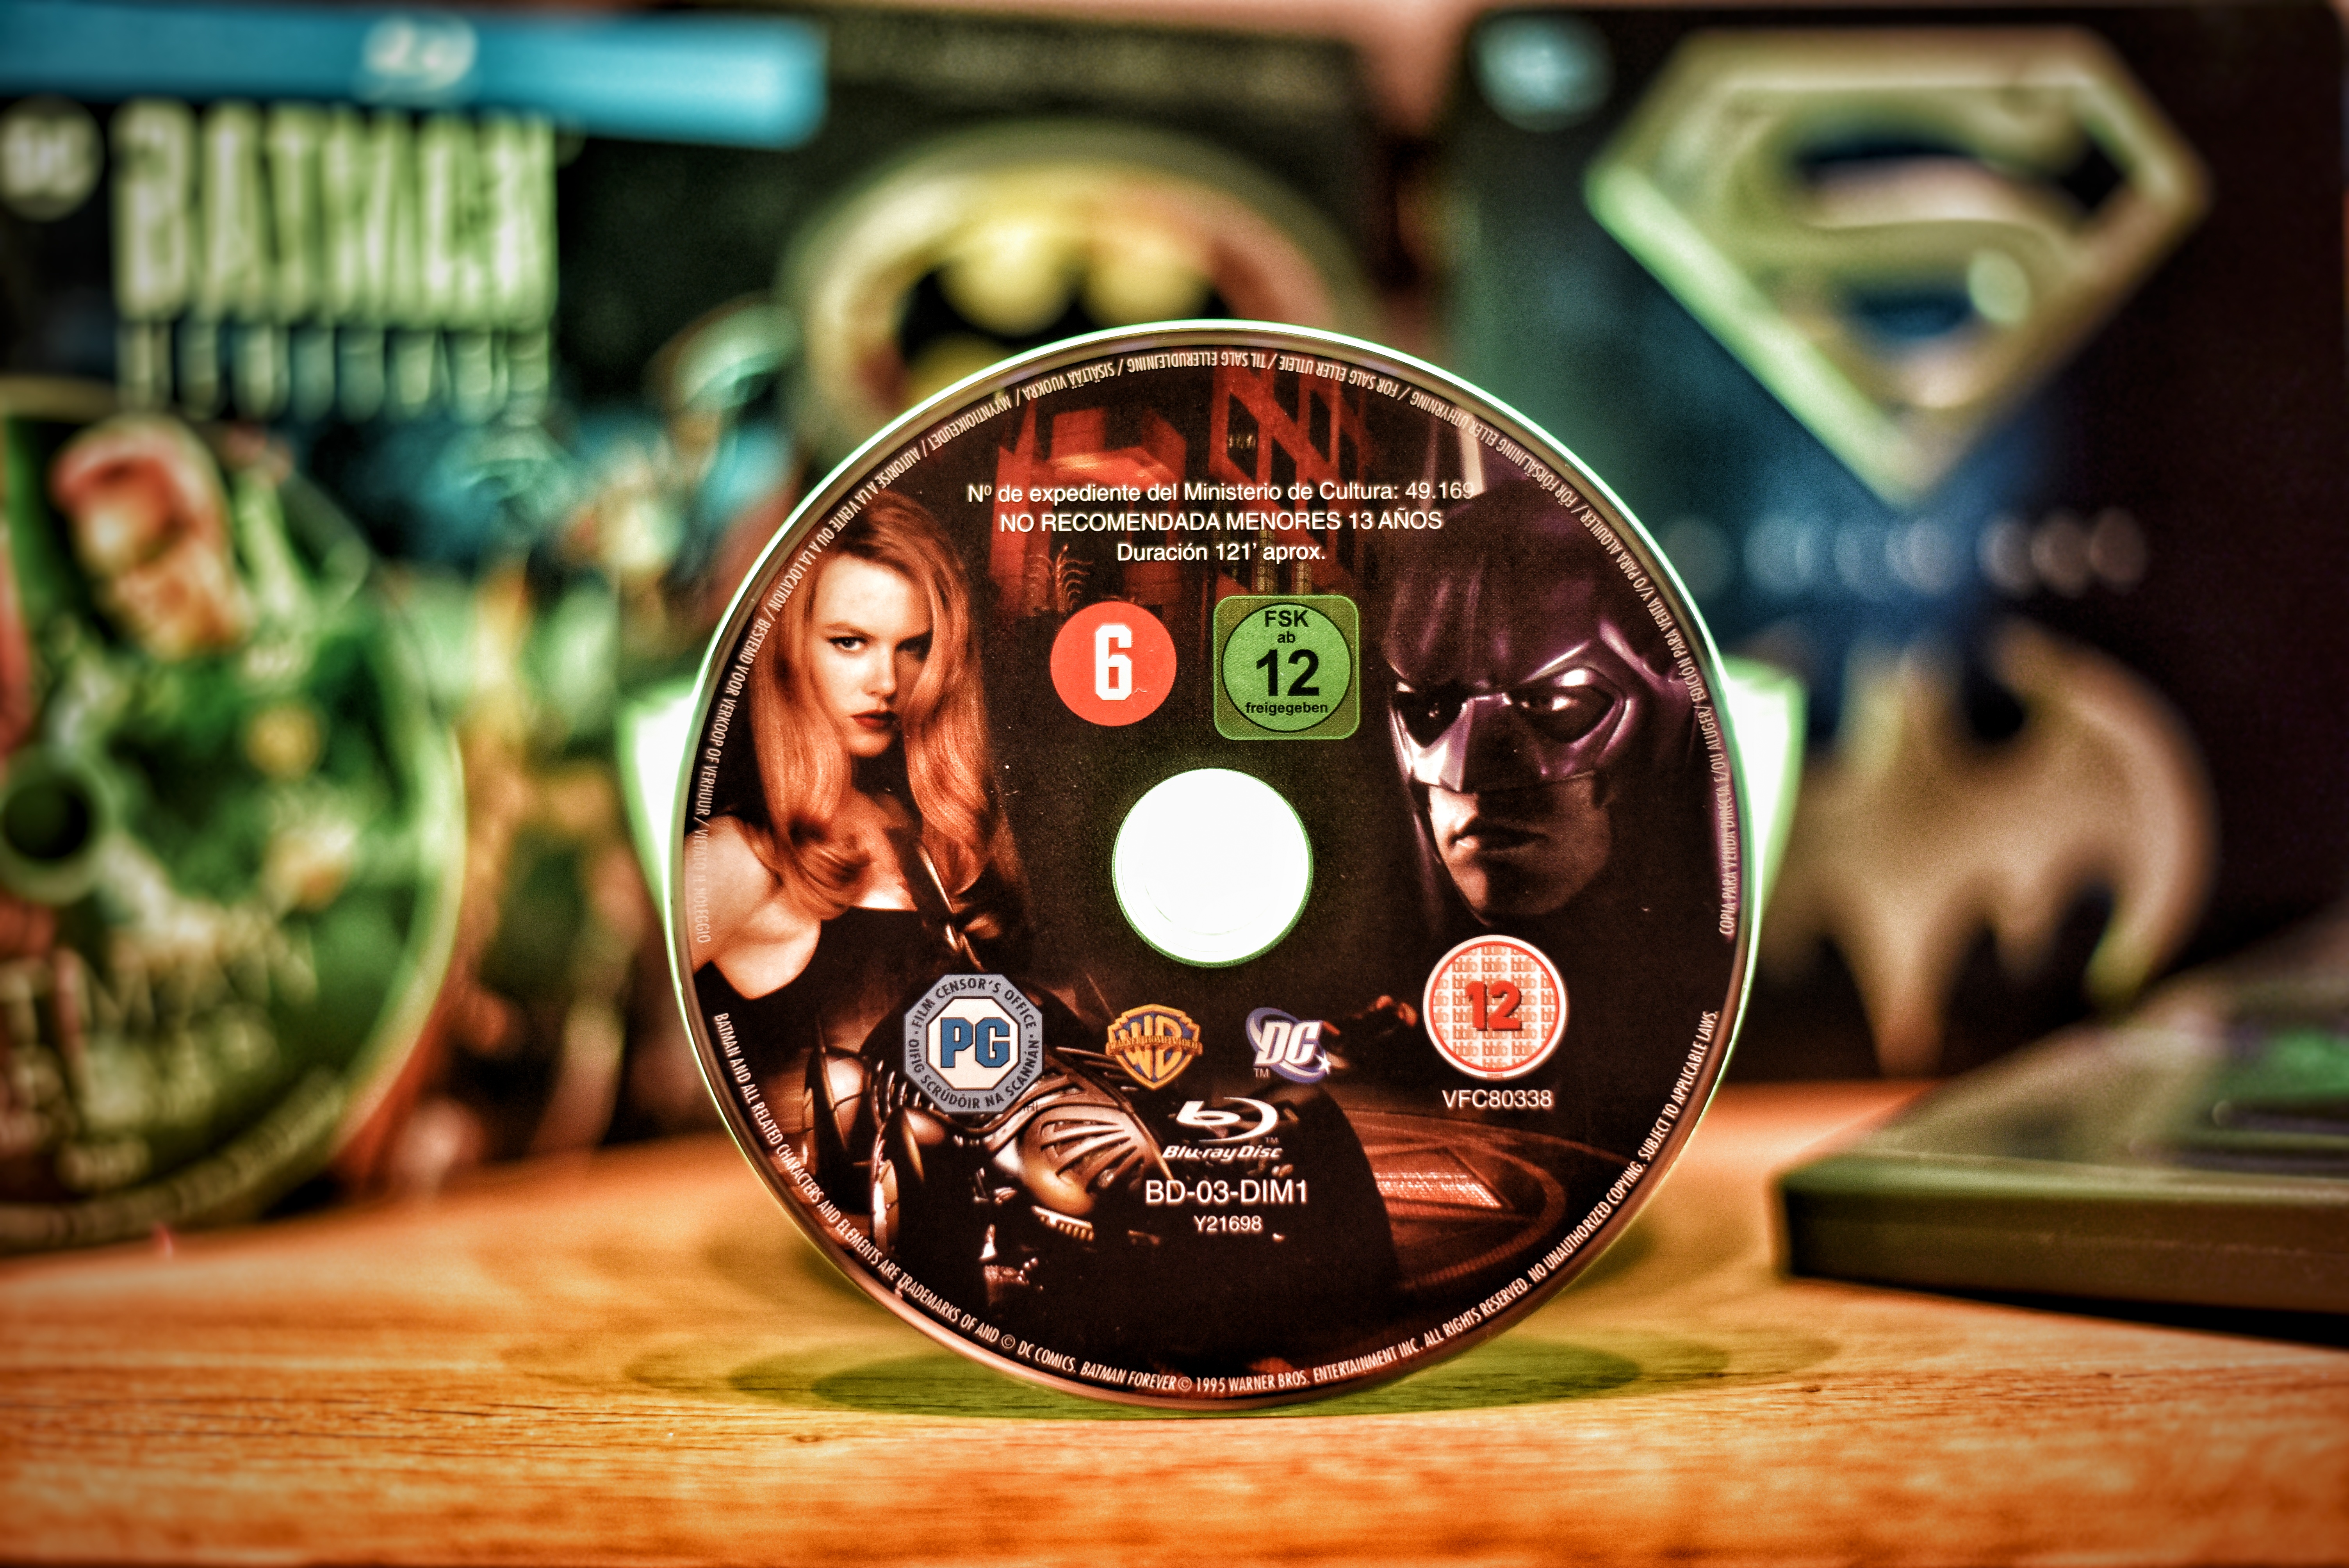 Batman Forever Blu-Ray